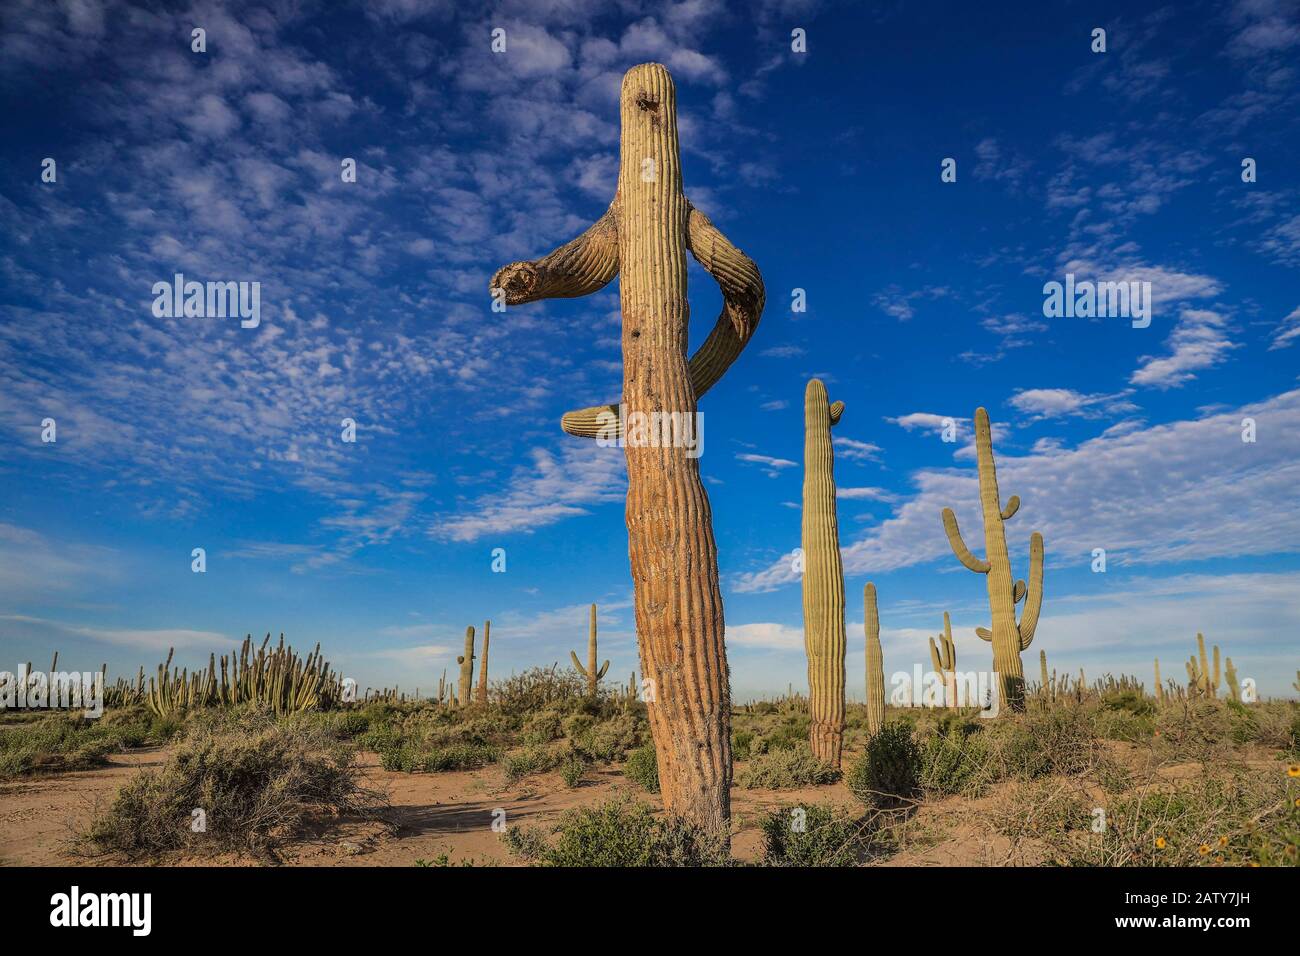 https://c8.alamy.com/comp/2ATY7JH/saguaro-or-sahuaro-carnegiea-gigantea-shaped-like-a-man-typical-columnar-cactus-from-the-sonoran-desert-mexico-monotpicoc-is-a-species-of-greater-size-among-the-cacti-key-words-surreal-alien-extraterrestrial-strange-shape-malformation-twisted-tree-brazes-bony-thorns-rare-twisted-crooked-crooked-saguaro-o-sahuaro-carnegiea-gigantea-con-forma-de-un-hombre-cactus-columnar-tpico-del-desierto-de-sonora-mexico-monotpicoc-es-una-especies-de-mayor-porte-entre-las-cactceaspalabras-claves-surreal-alienigena-extraterreste-extrao-forma-malformacion-retorcido-2ATY7JH.jpg